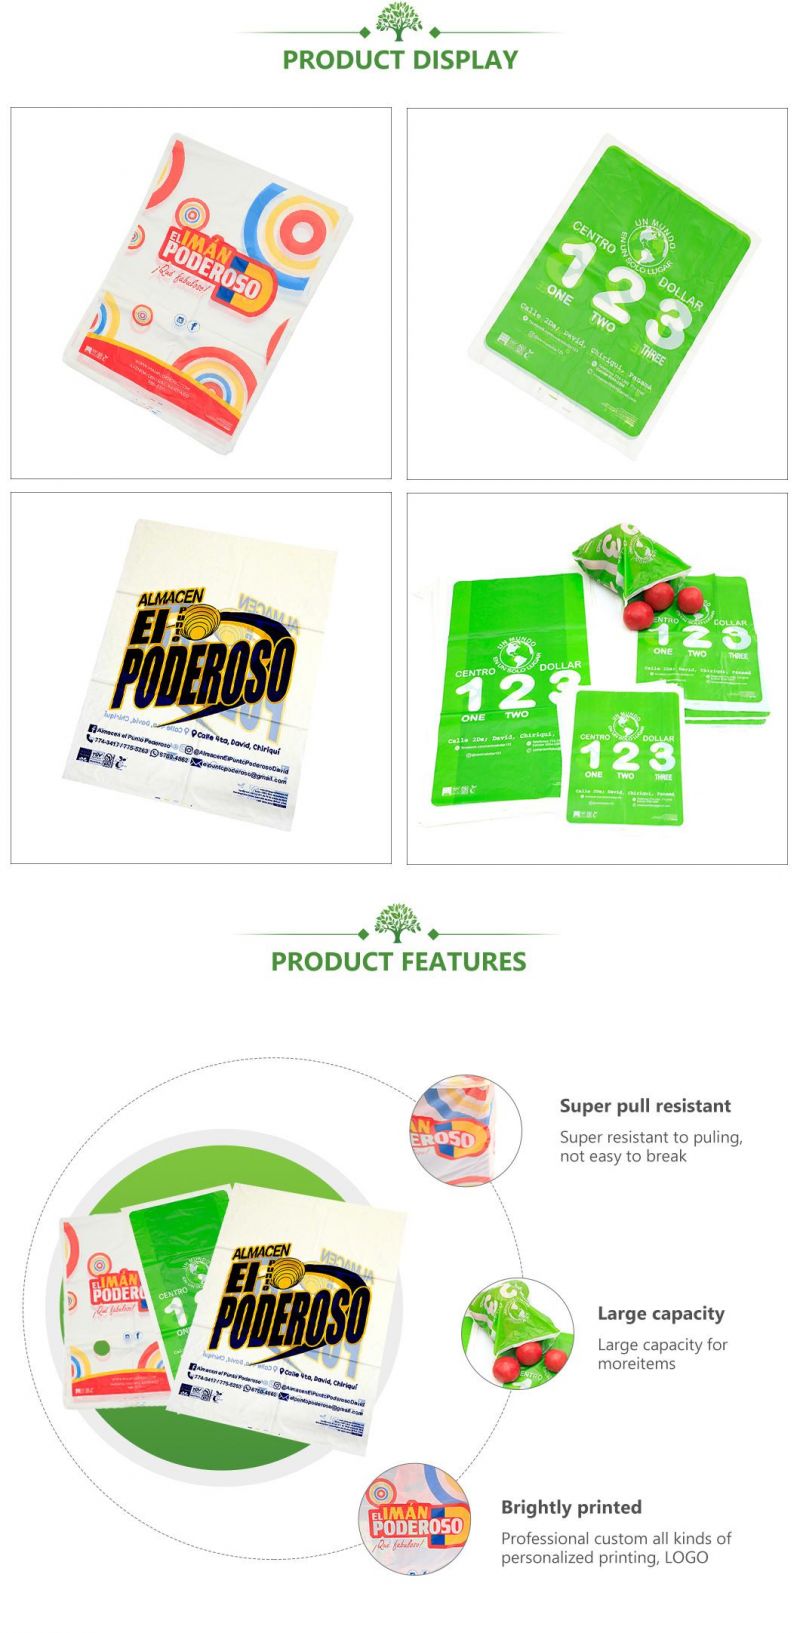 PLA+Pbat/Pbat+Corn Starch Biodegradable Bags, Compostable Bags, Storage Bags for Hospital